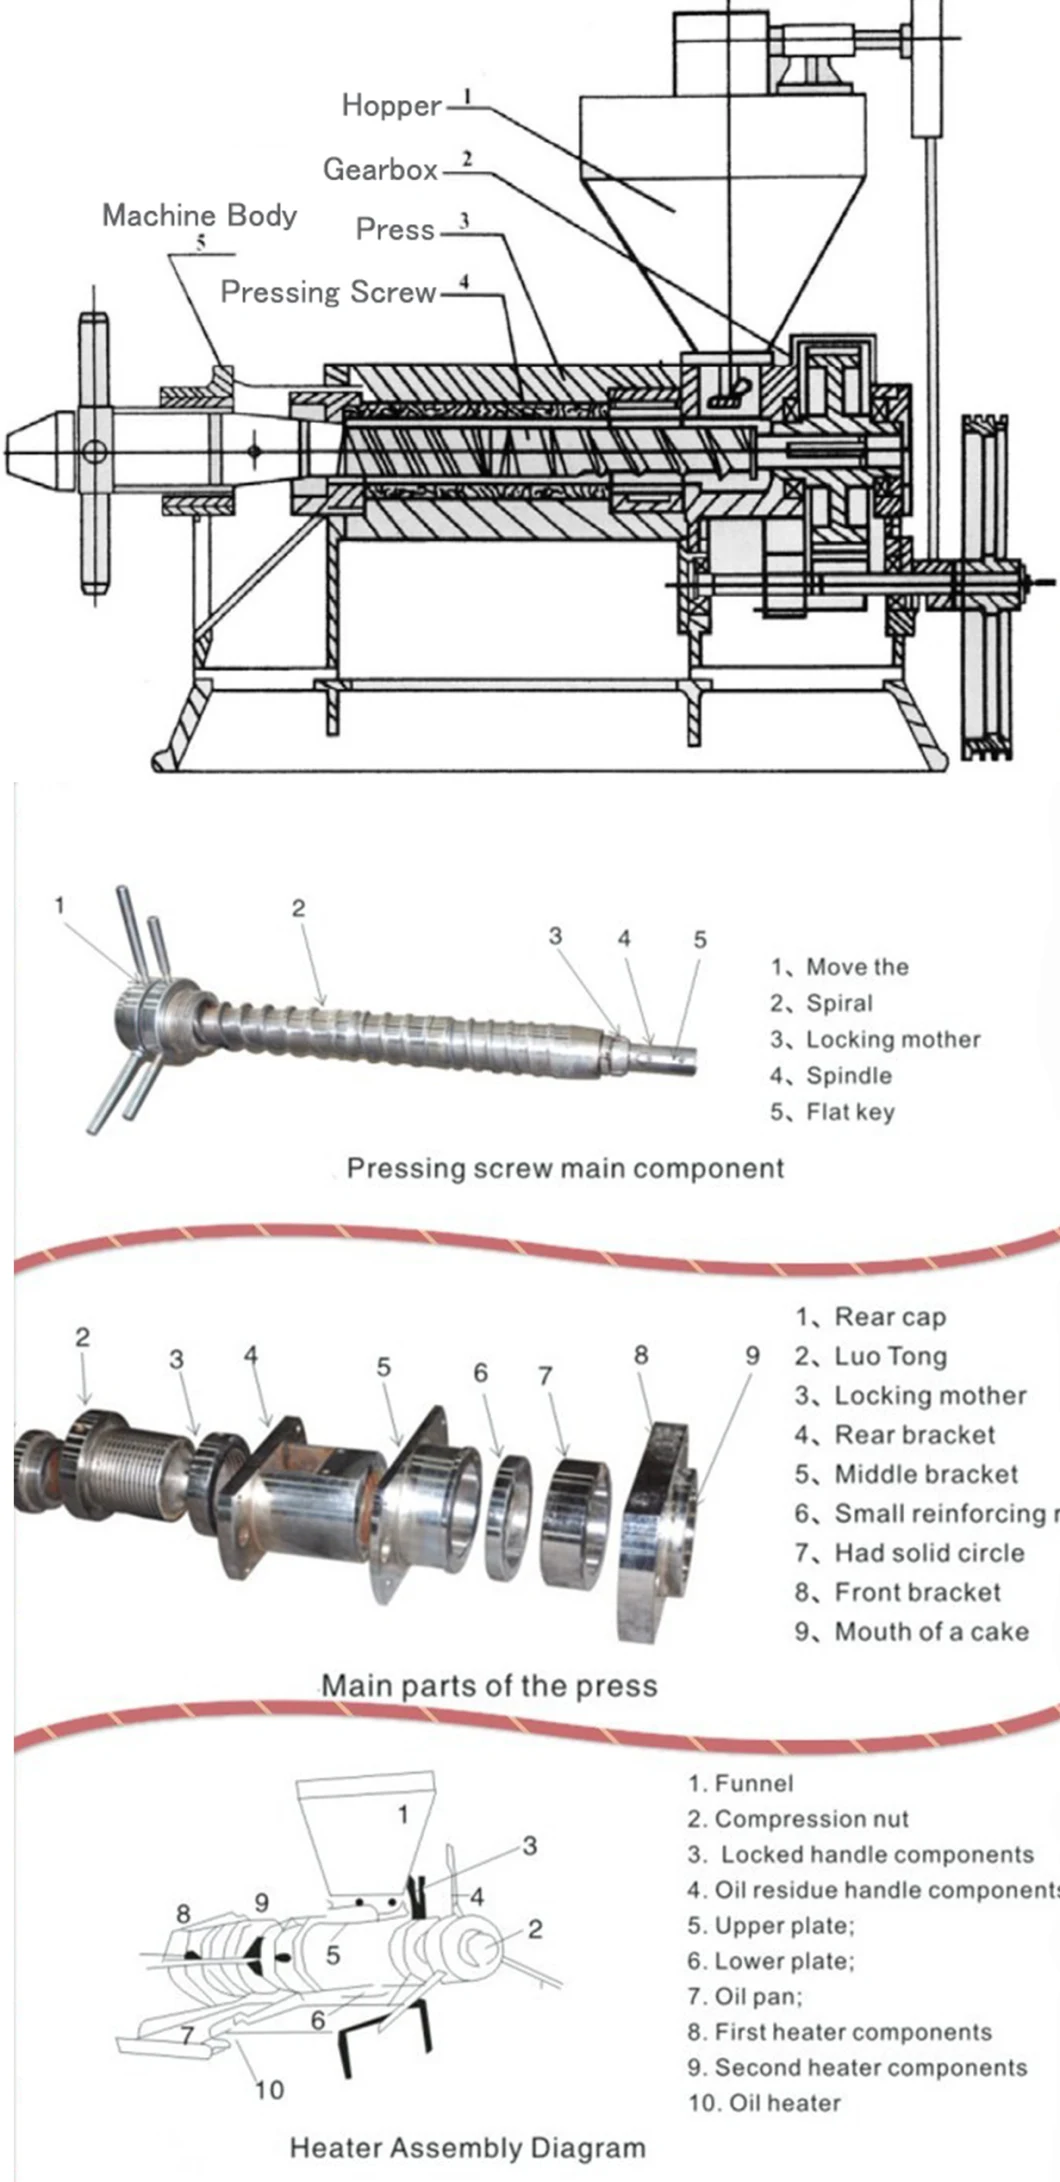 Press Oil Seed Oil Press Motor Combined Oil Press